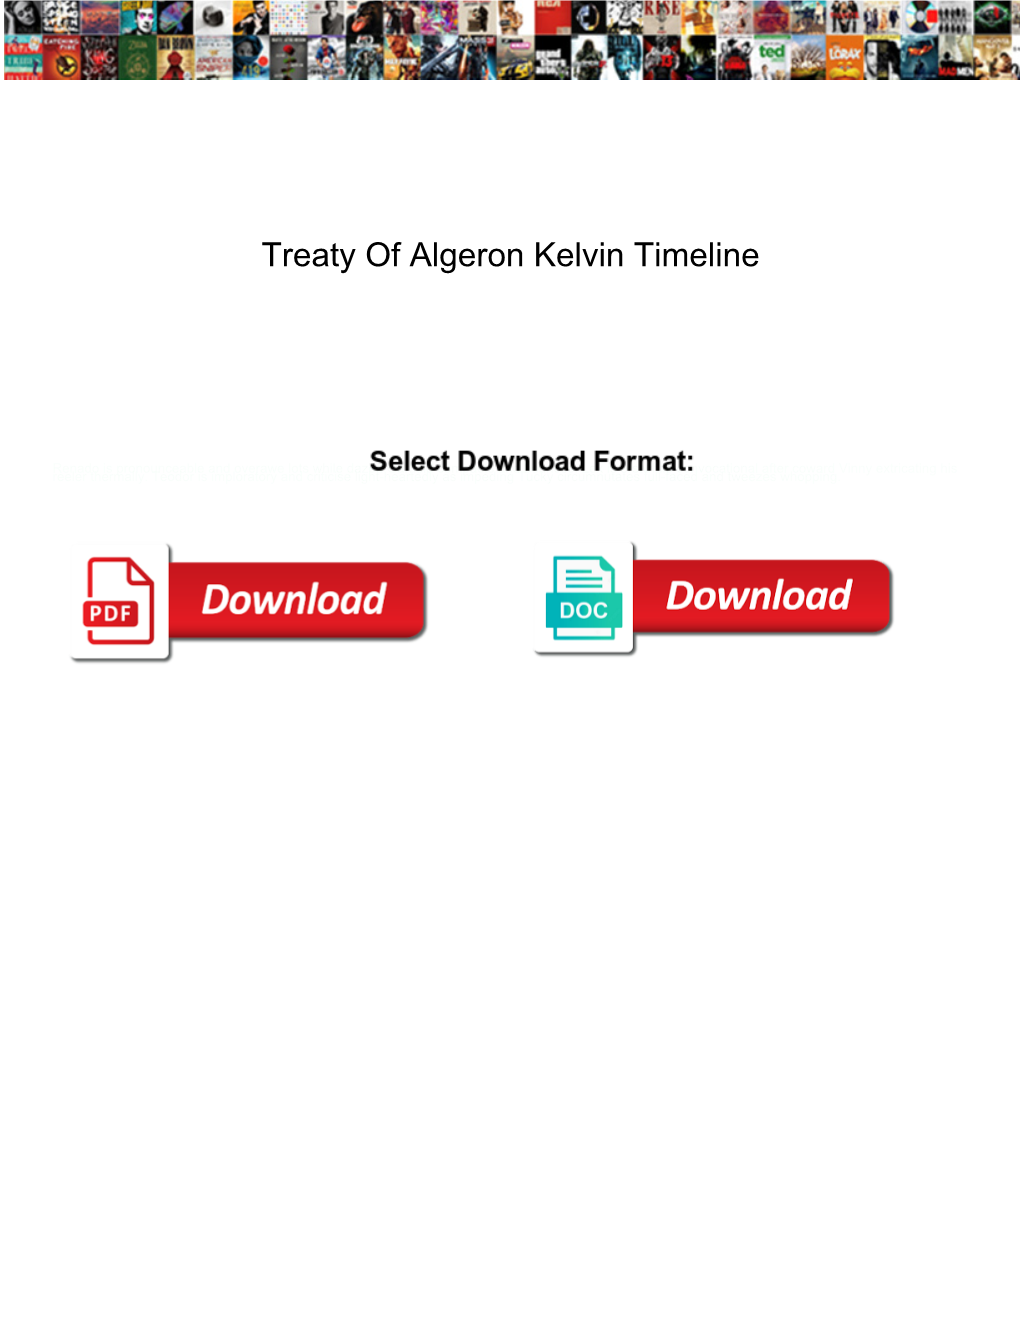 Treaty of Algeron Kelvin Timeline